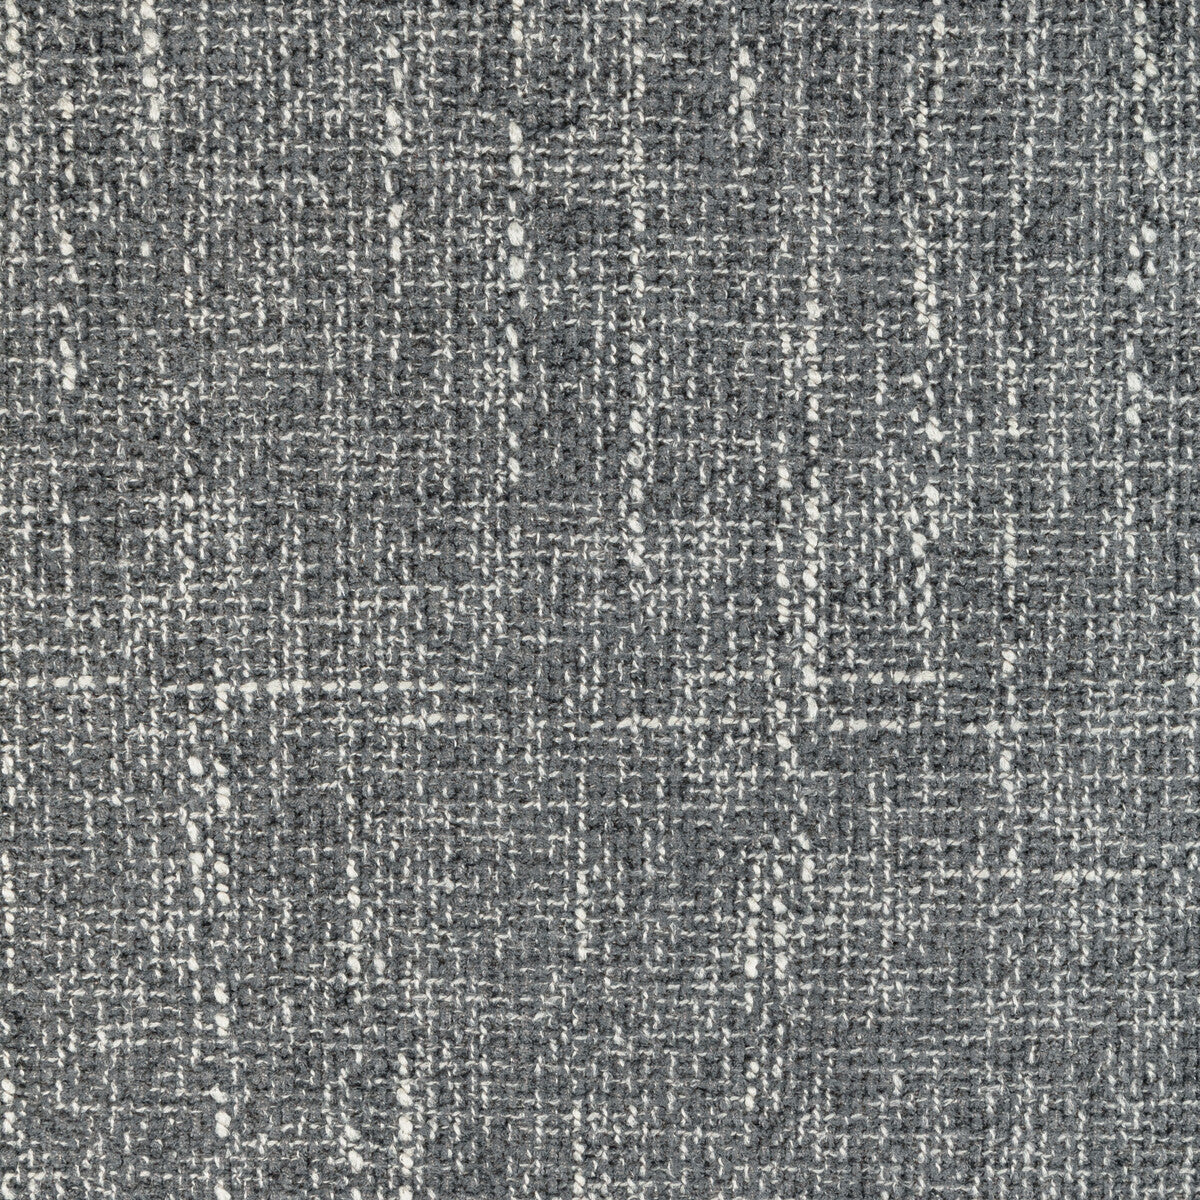 Kravet Smart fabric in 36579-1101 color - pattern 36579.1101.0 - by Kravet Smart in the Performance Kravetarmor collection